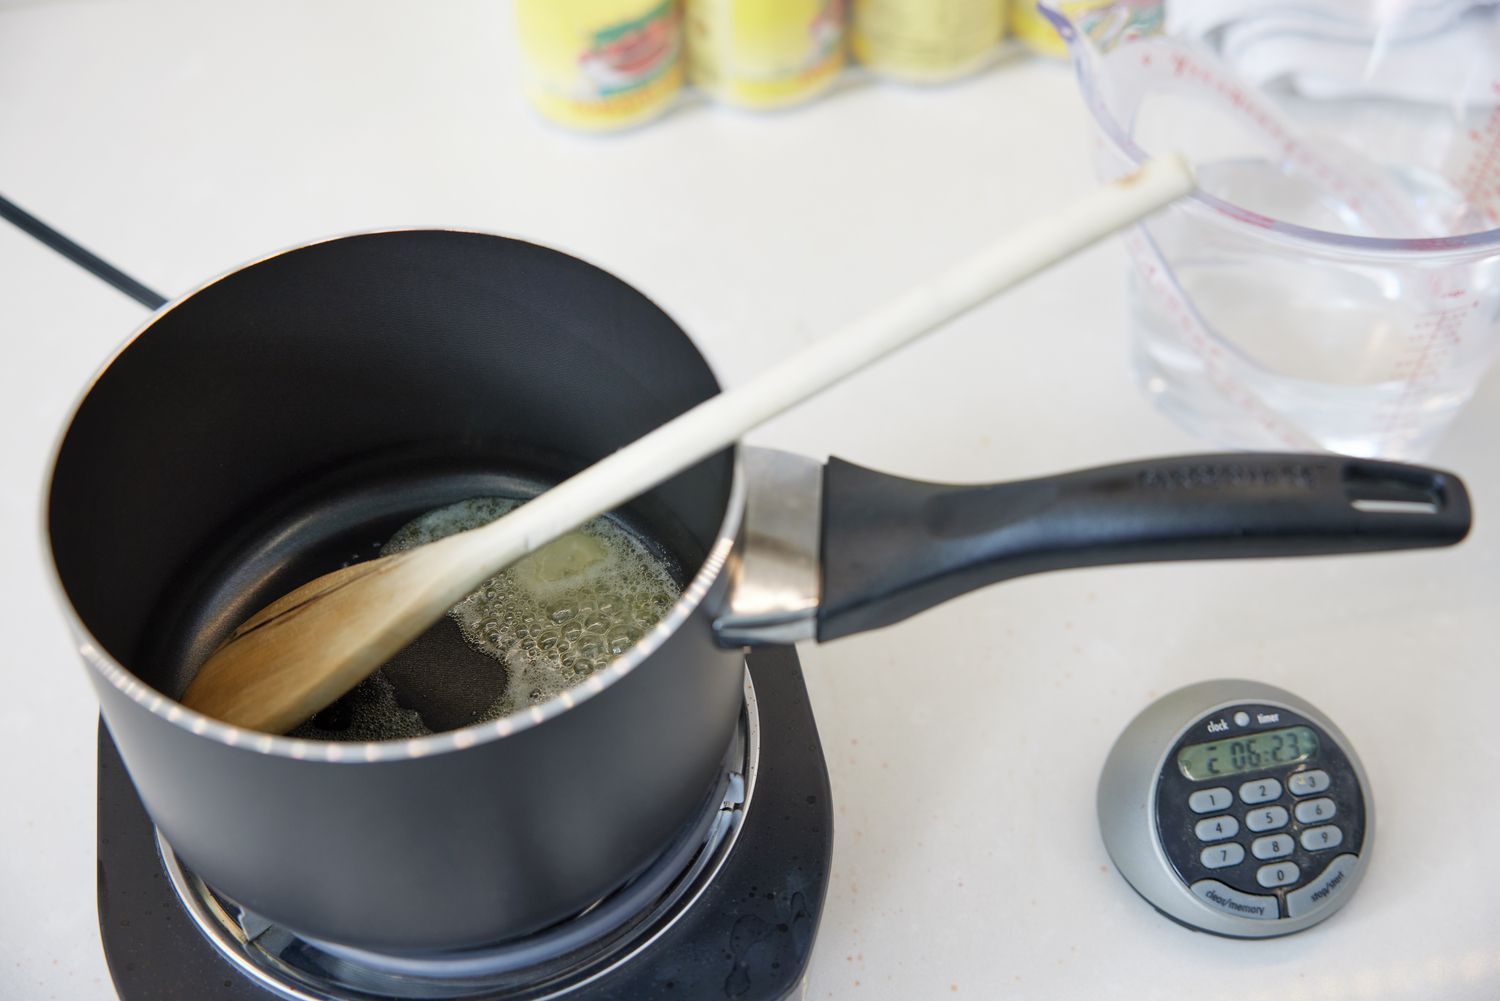 Butter melting in Farberware 1-Quart Nonstick Sauce Pan